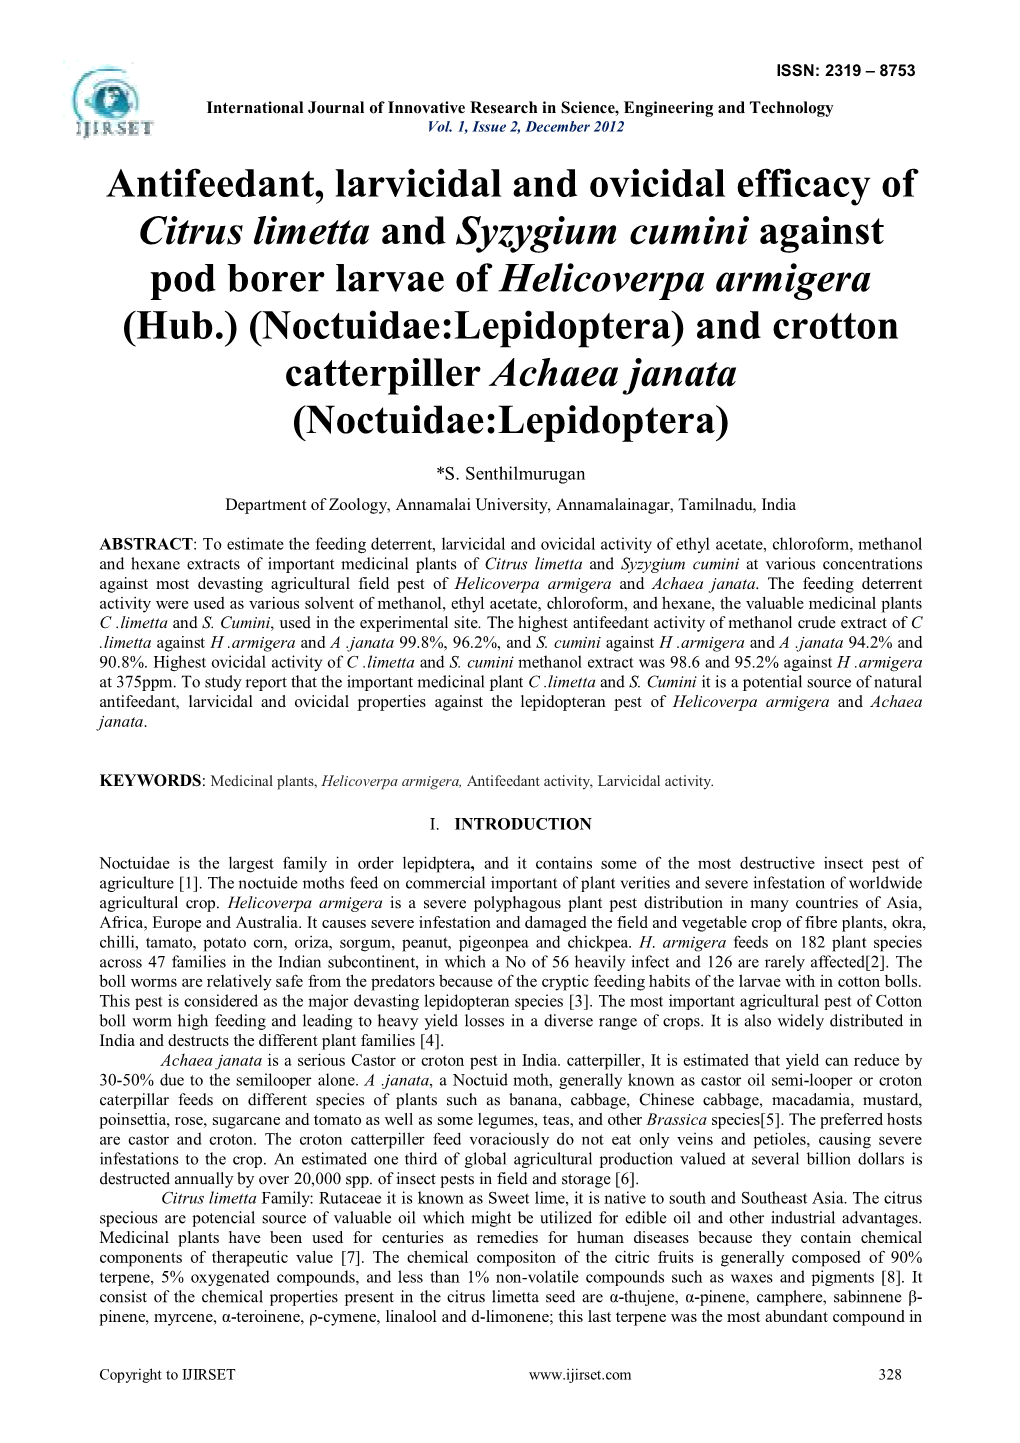 Antifeedant, Larvicidal and Ovicidal Efficacy of Citrus Limetta And